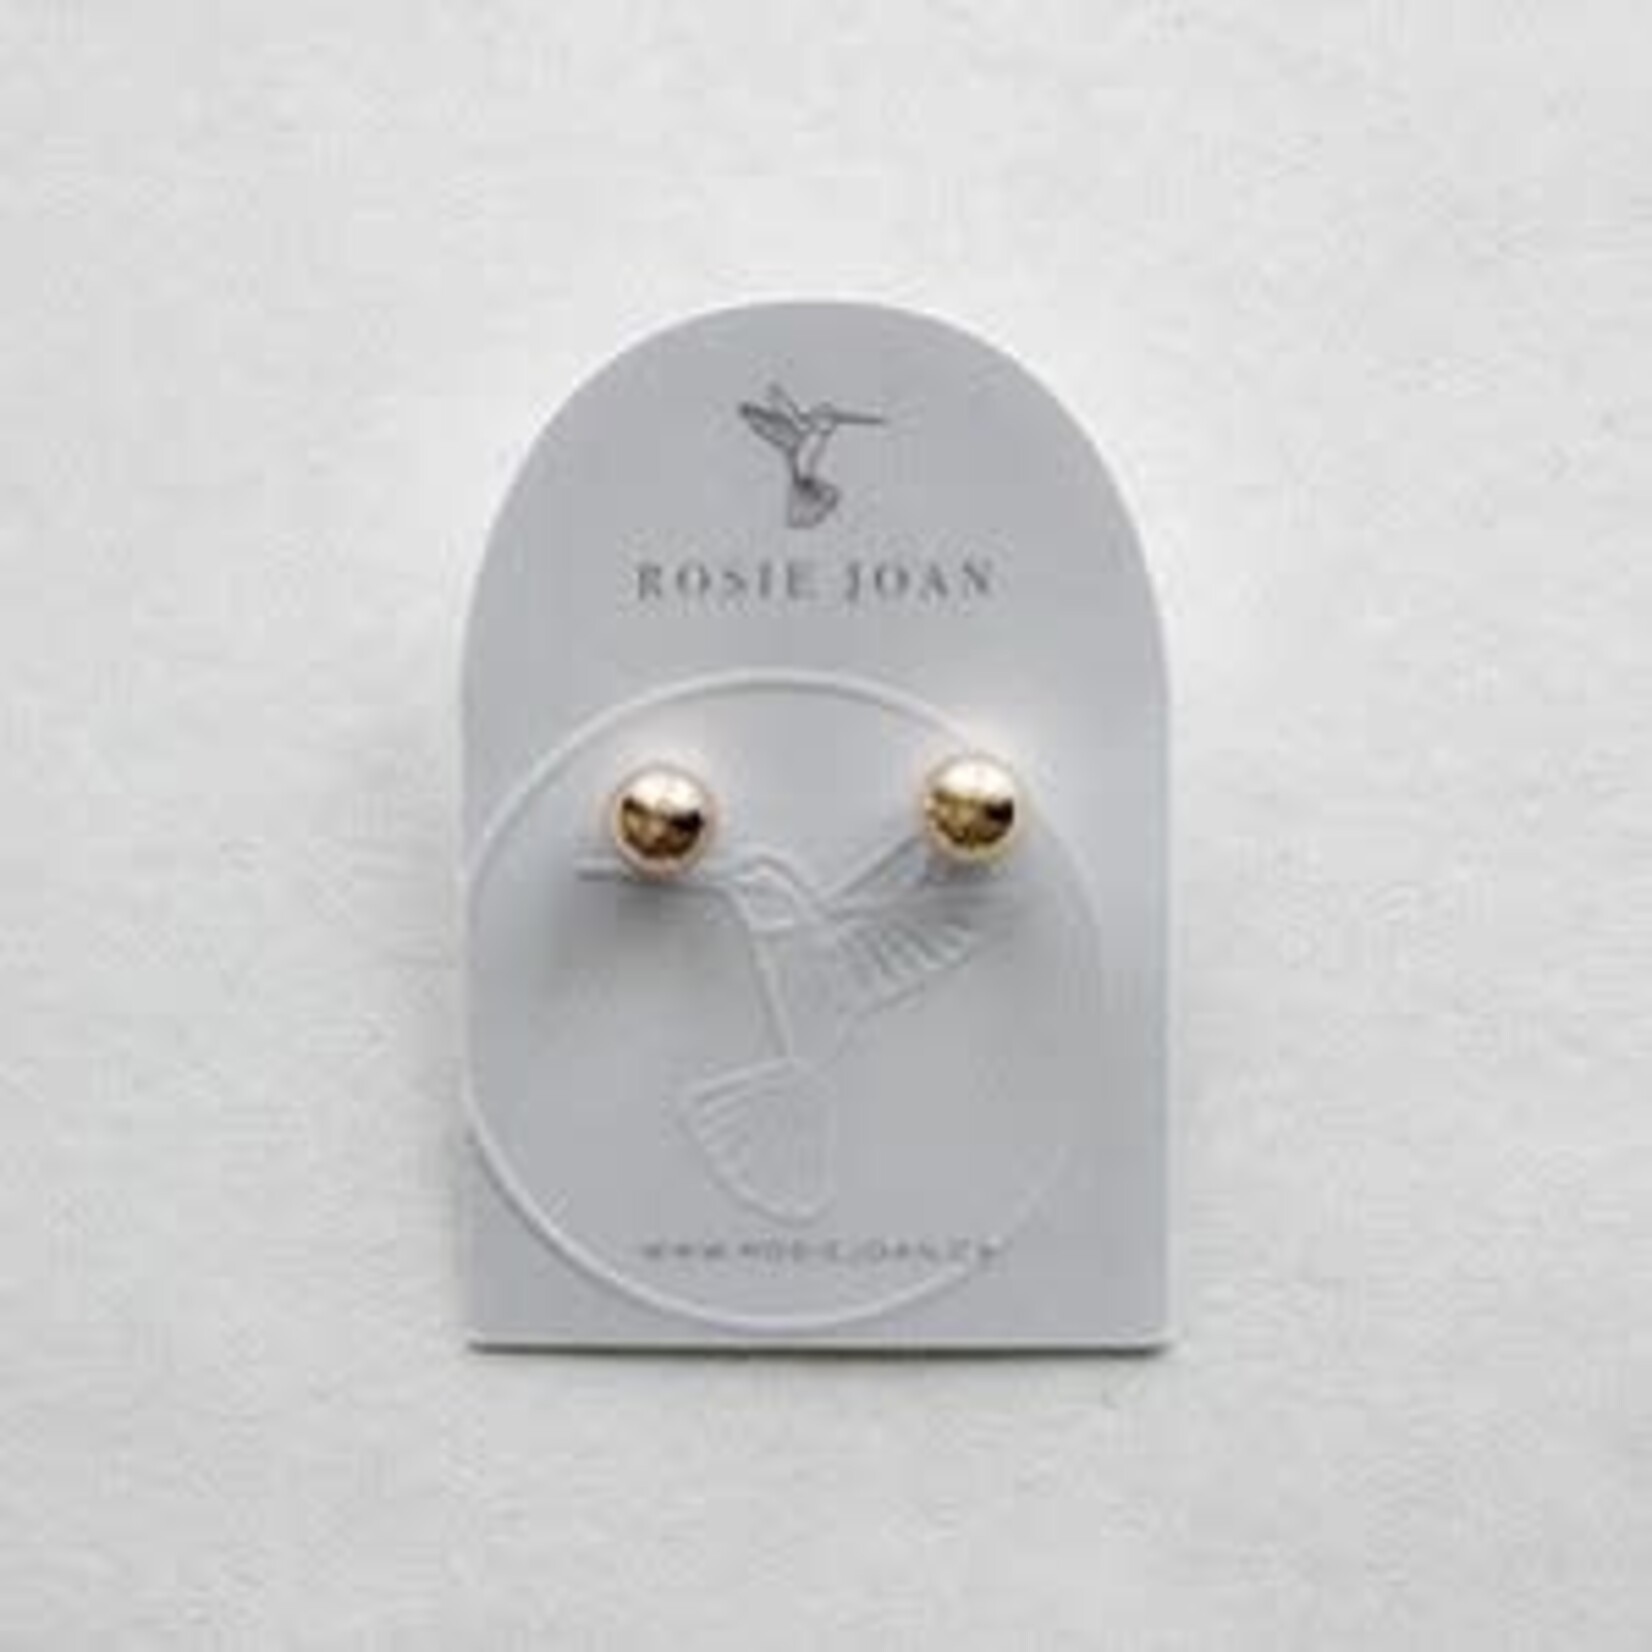 Rosie Joan Rosie Joan - 8mm Gold Filled Earrings